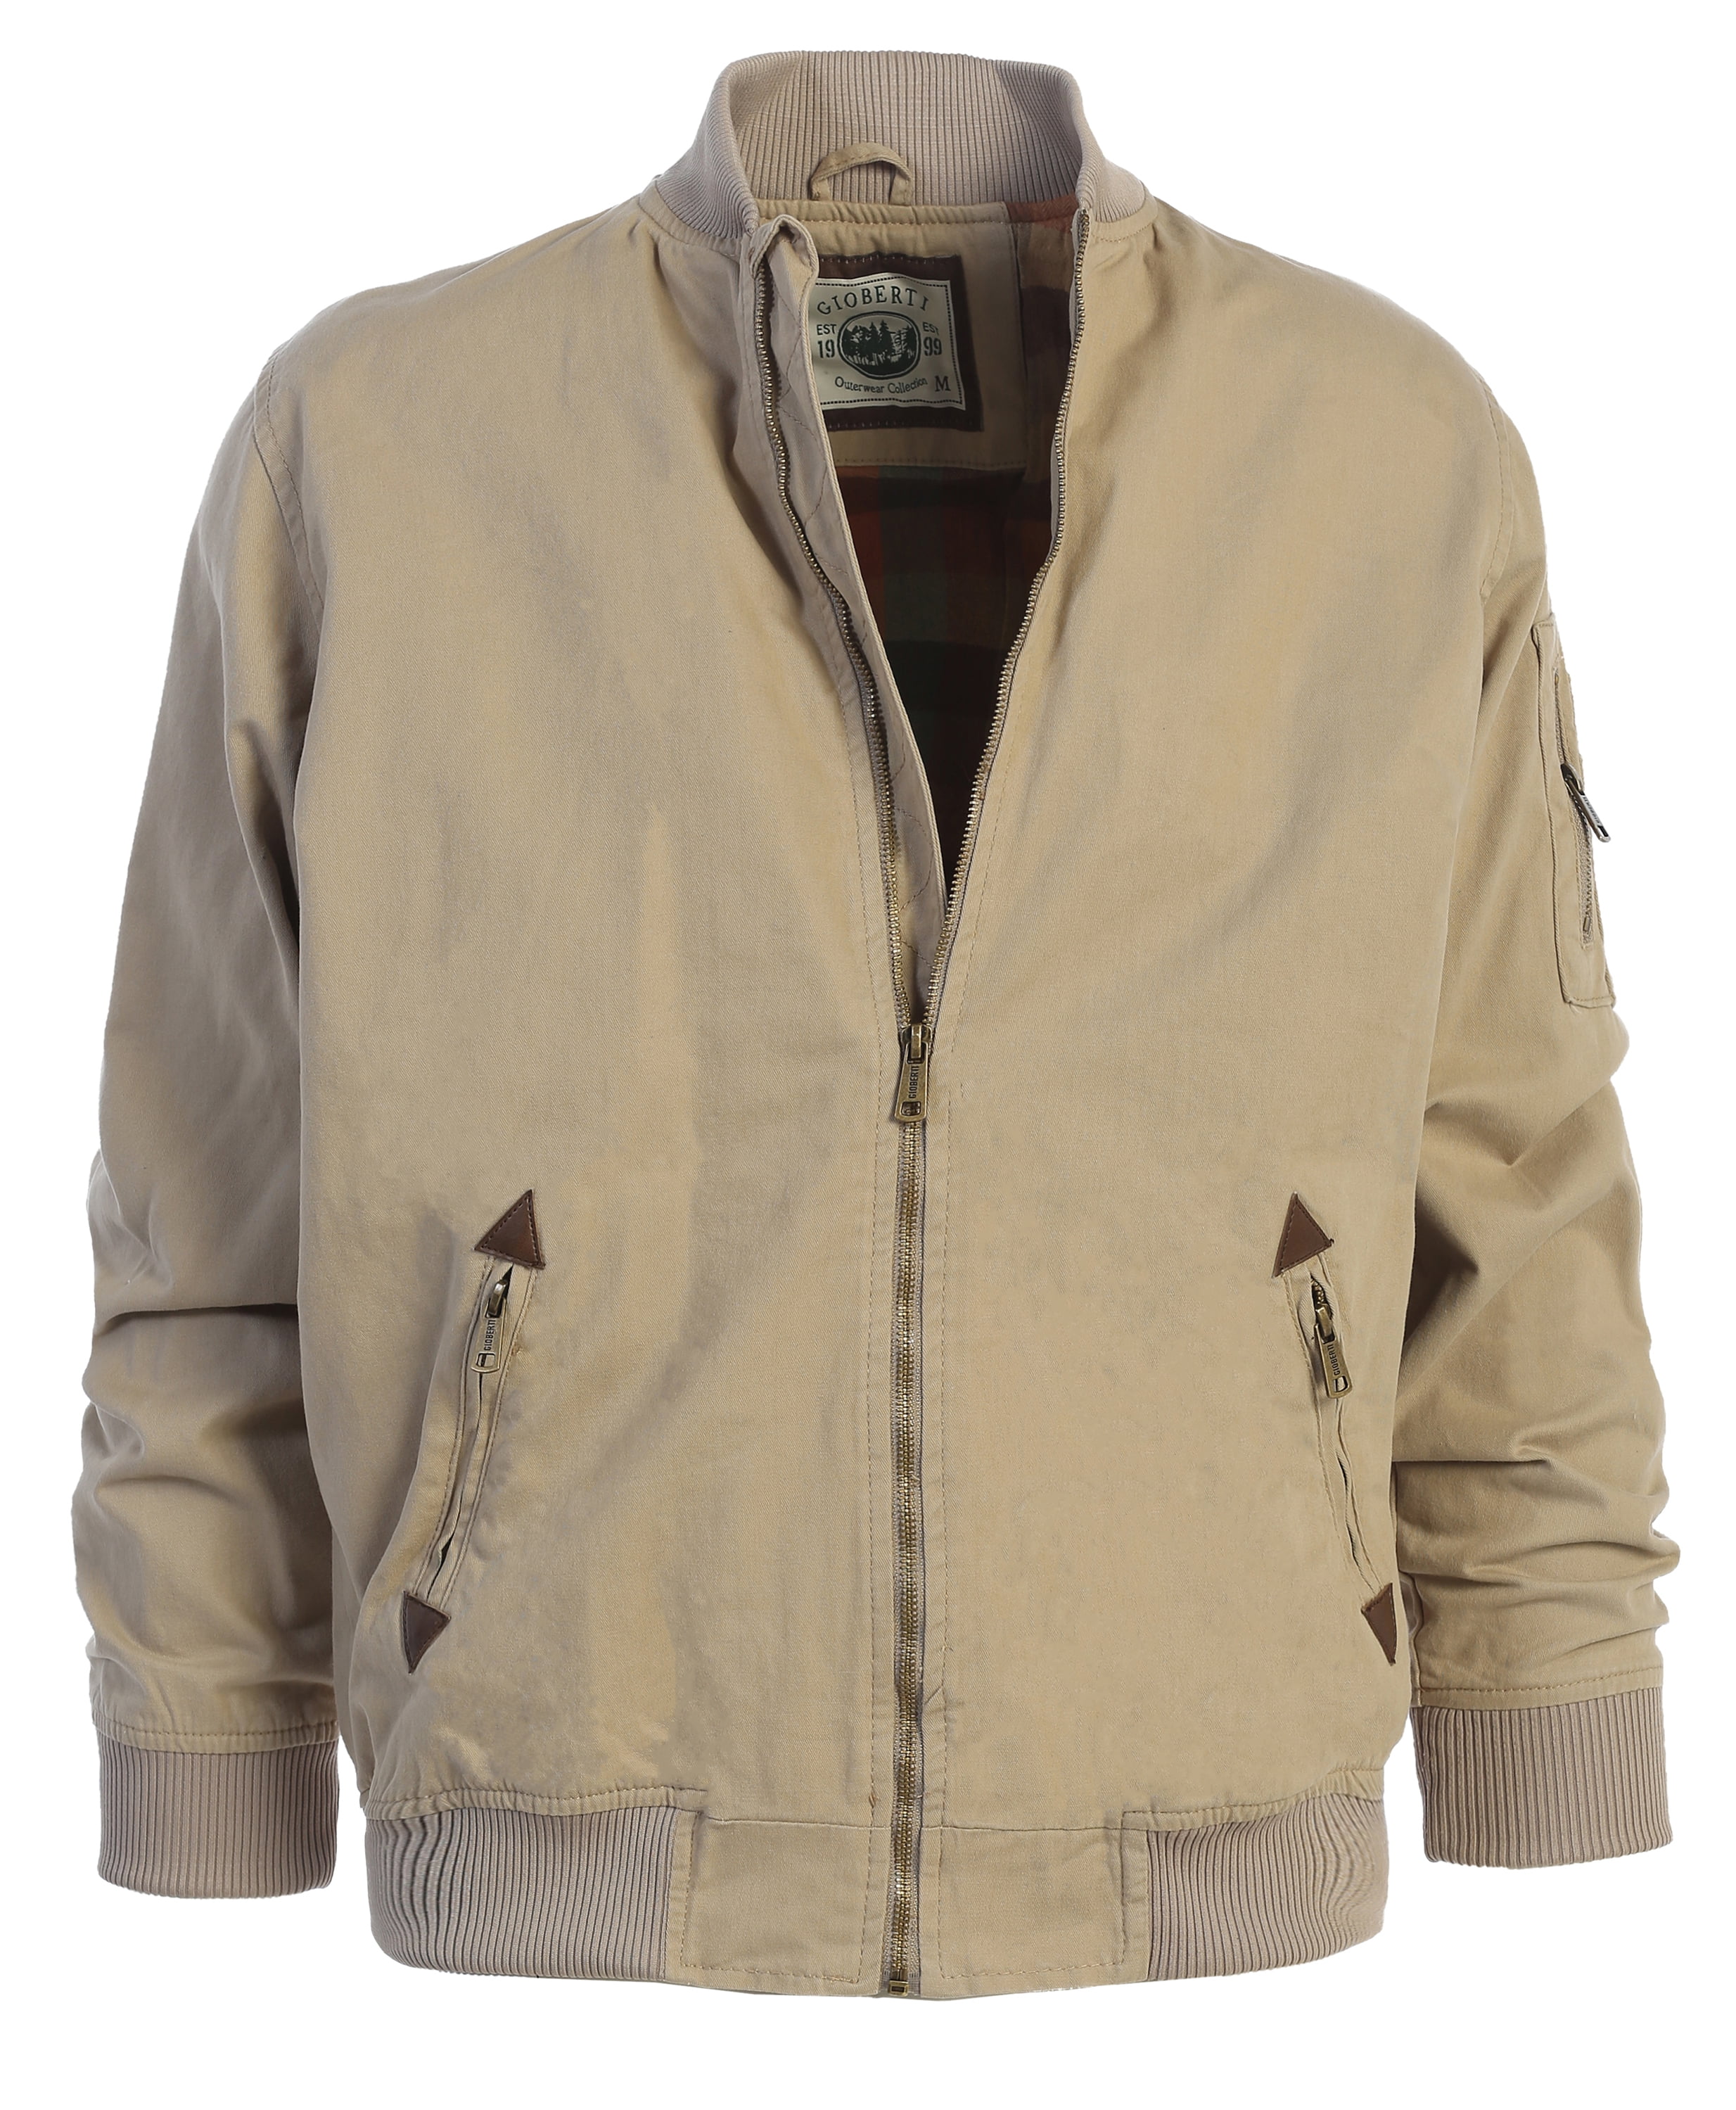 Gioberti Men's 100% Cotton Sportwear Full Zipper Twill Bomber Jacket at   Men’s Clothing store